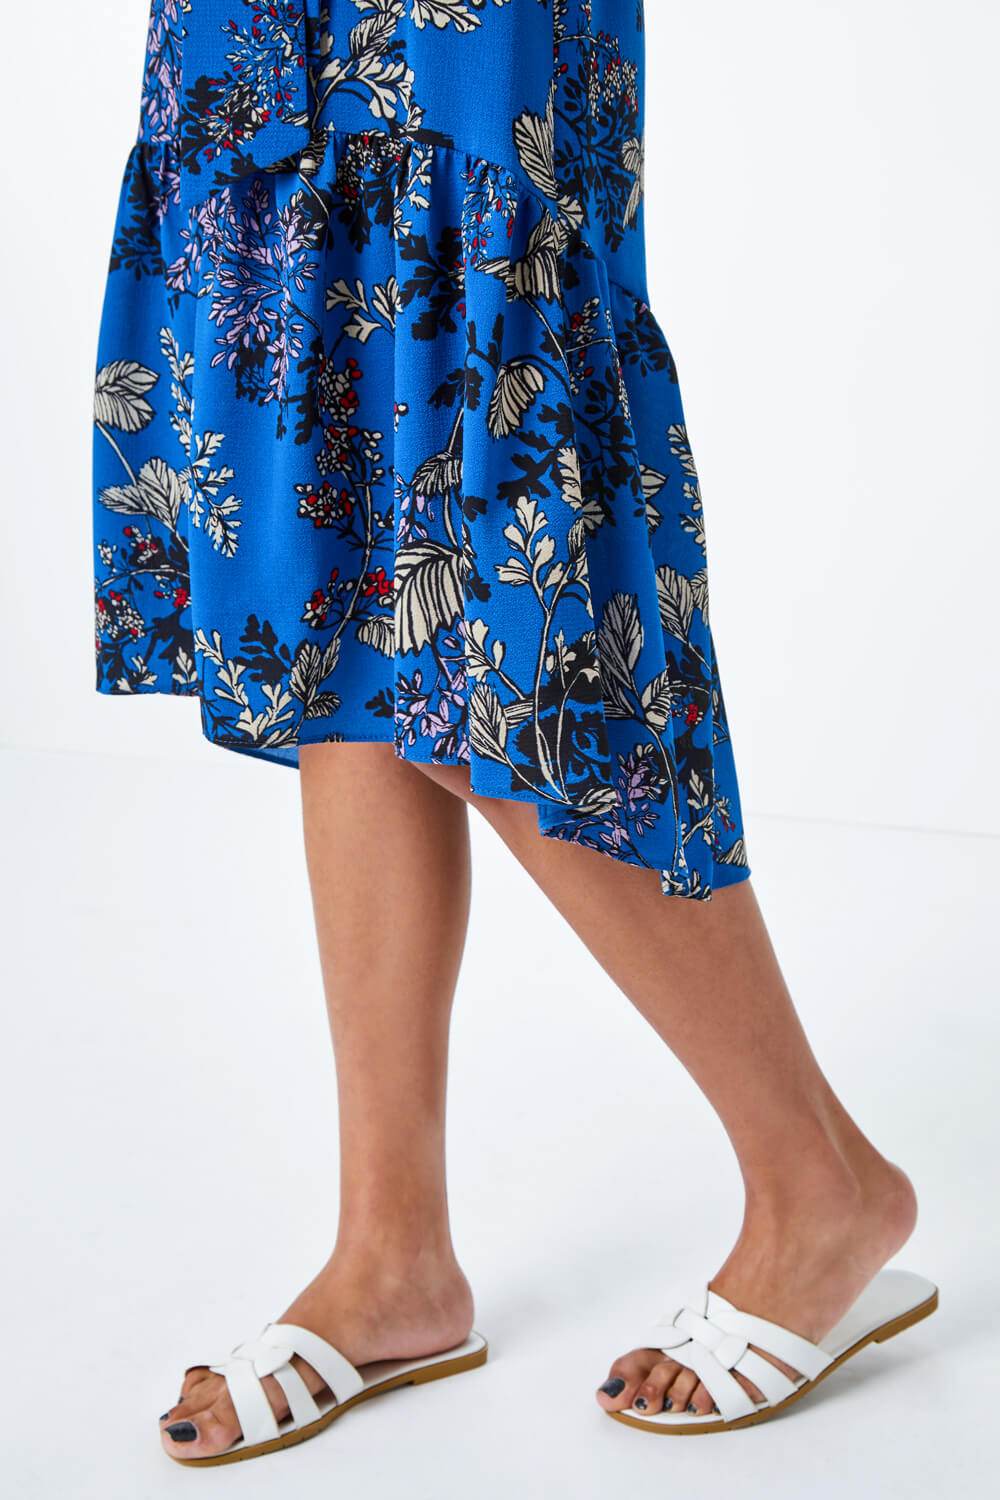 Blue Floral Print Dipped Hem Dress, Image 5 of 5